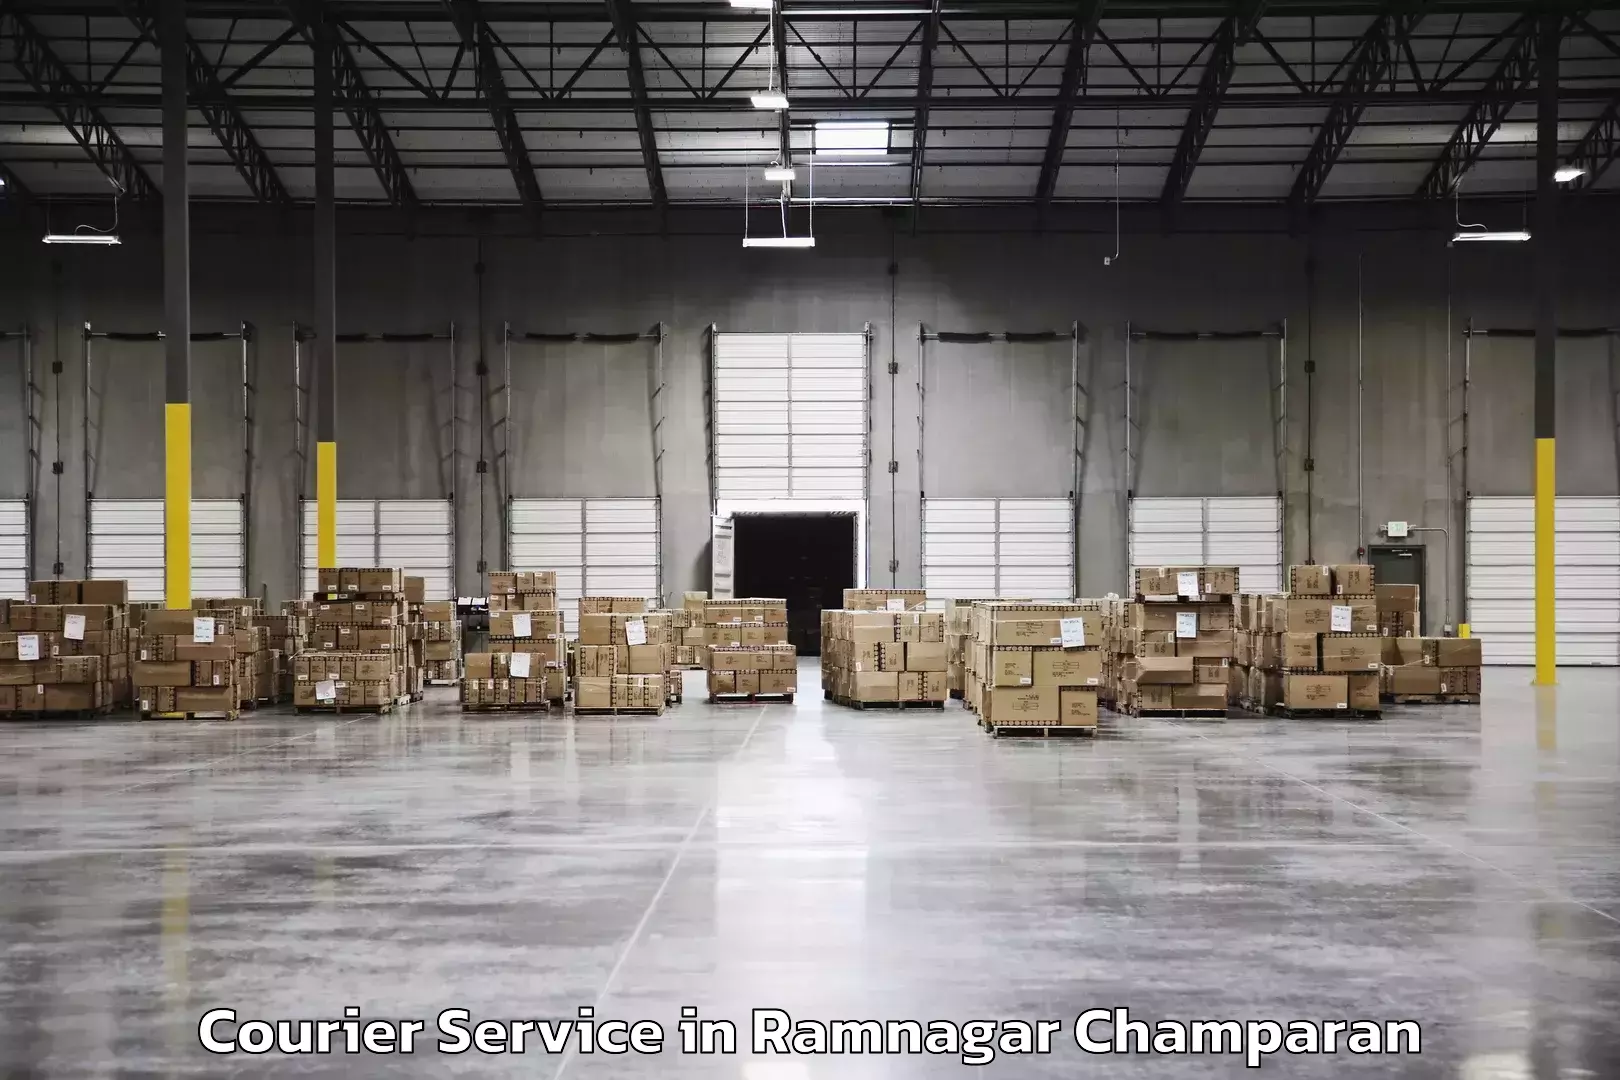 High-capacity parcel service in Ramnagar Champaran